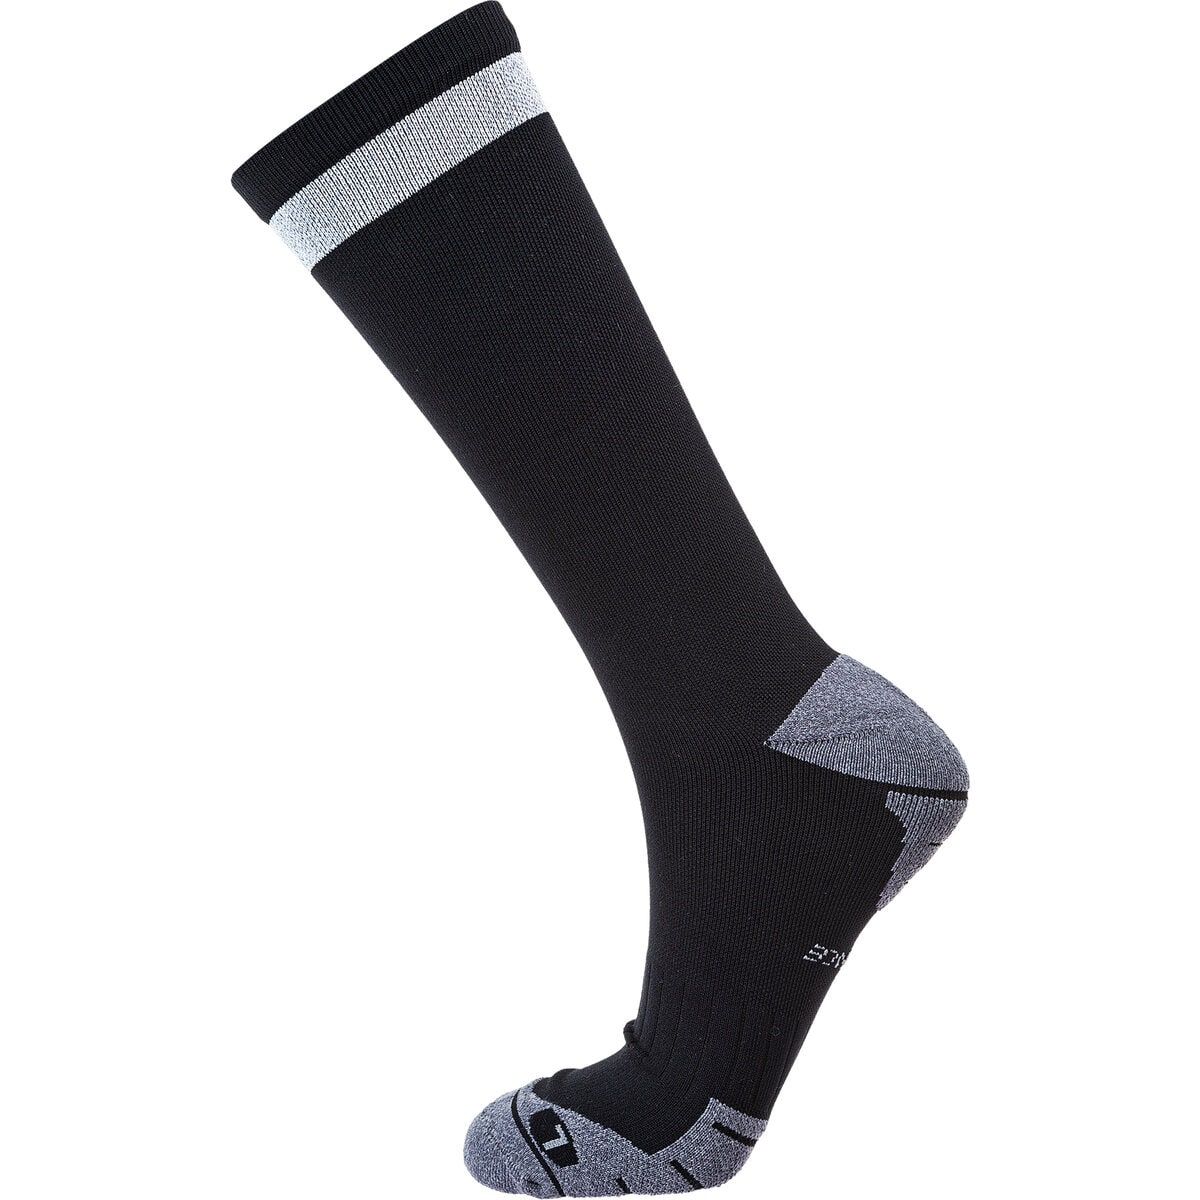 Endurance Torent Reflective Mid Length Running Sock Black